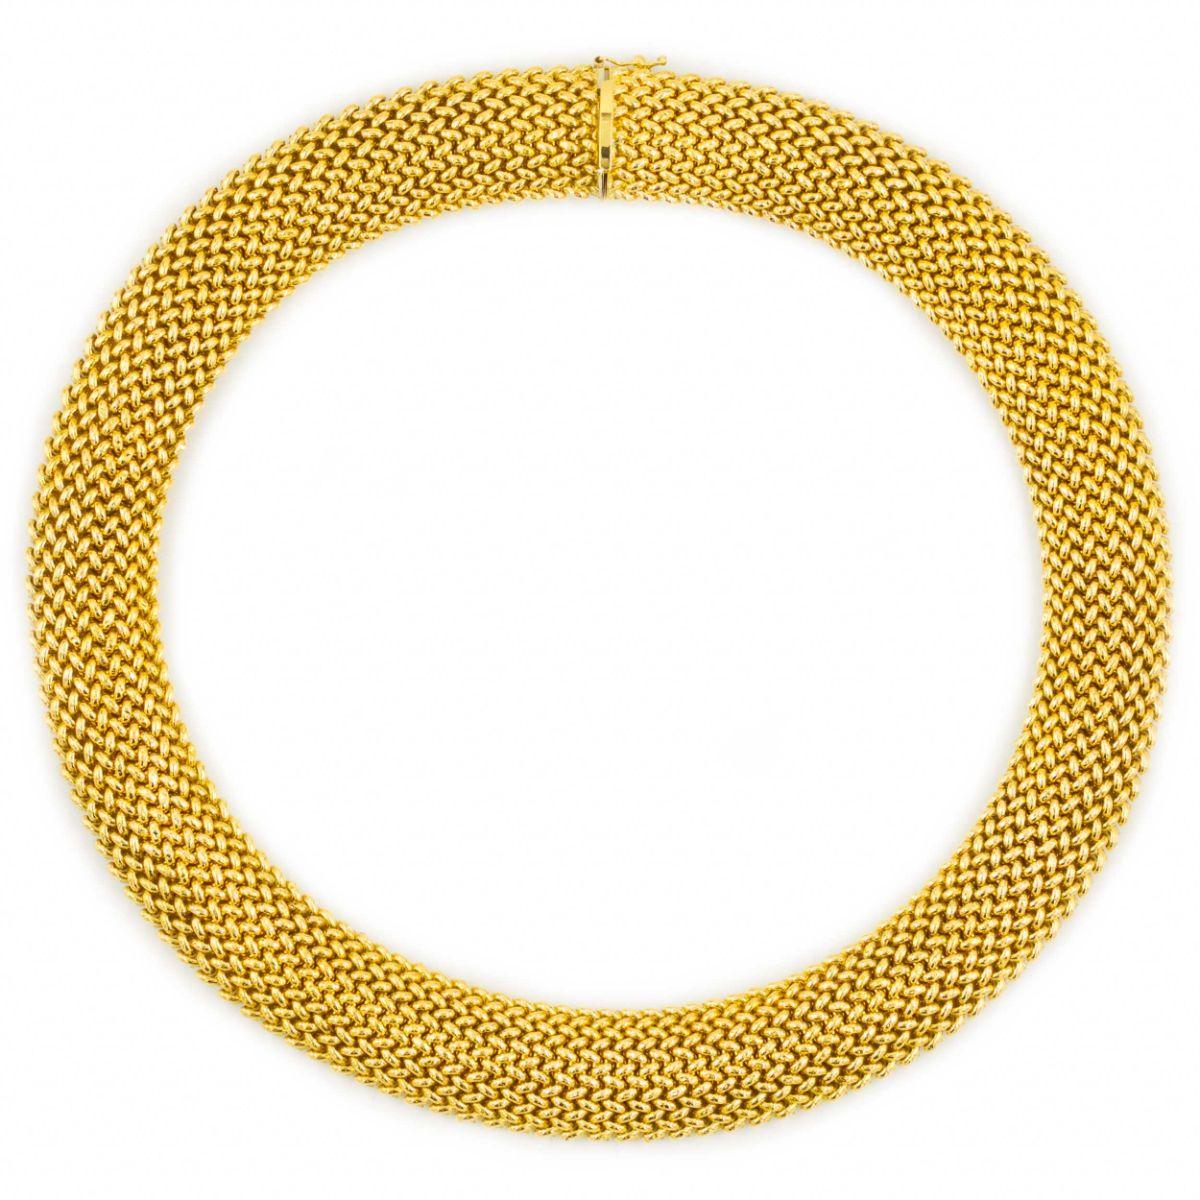 Modern Substantial Italian 18k Yellow Gold Flexible Mesh Necklace by Unoaerre